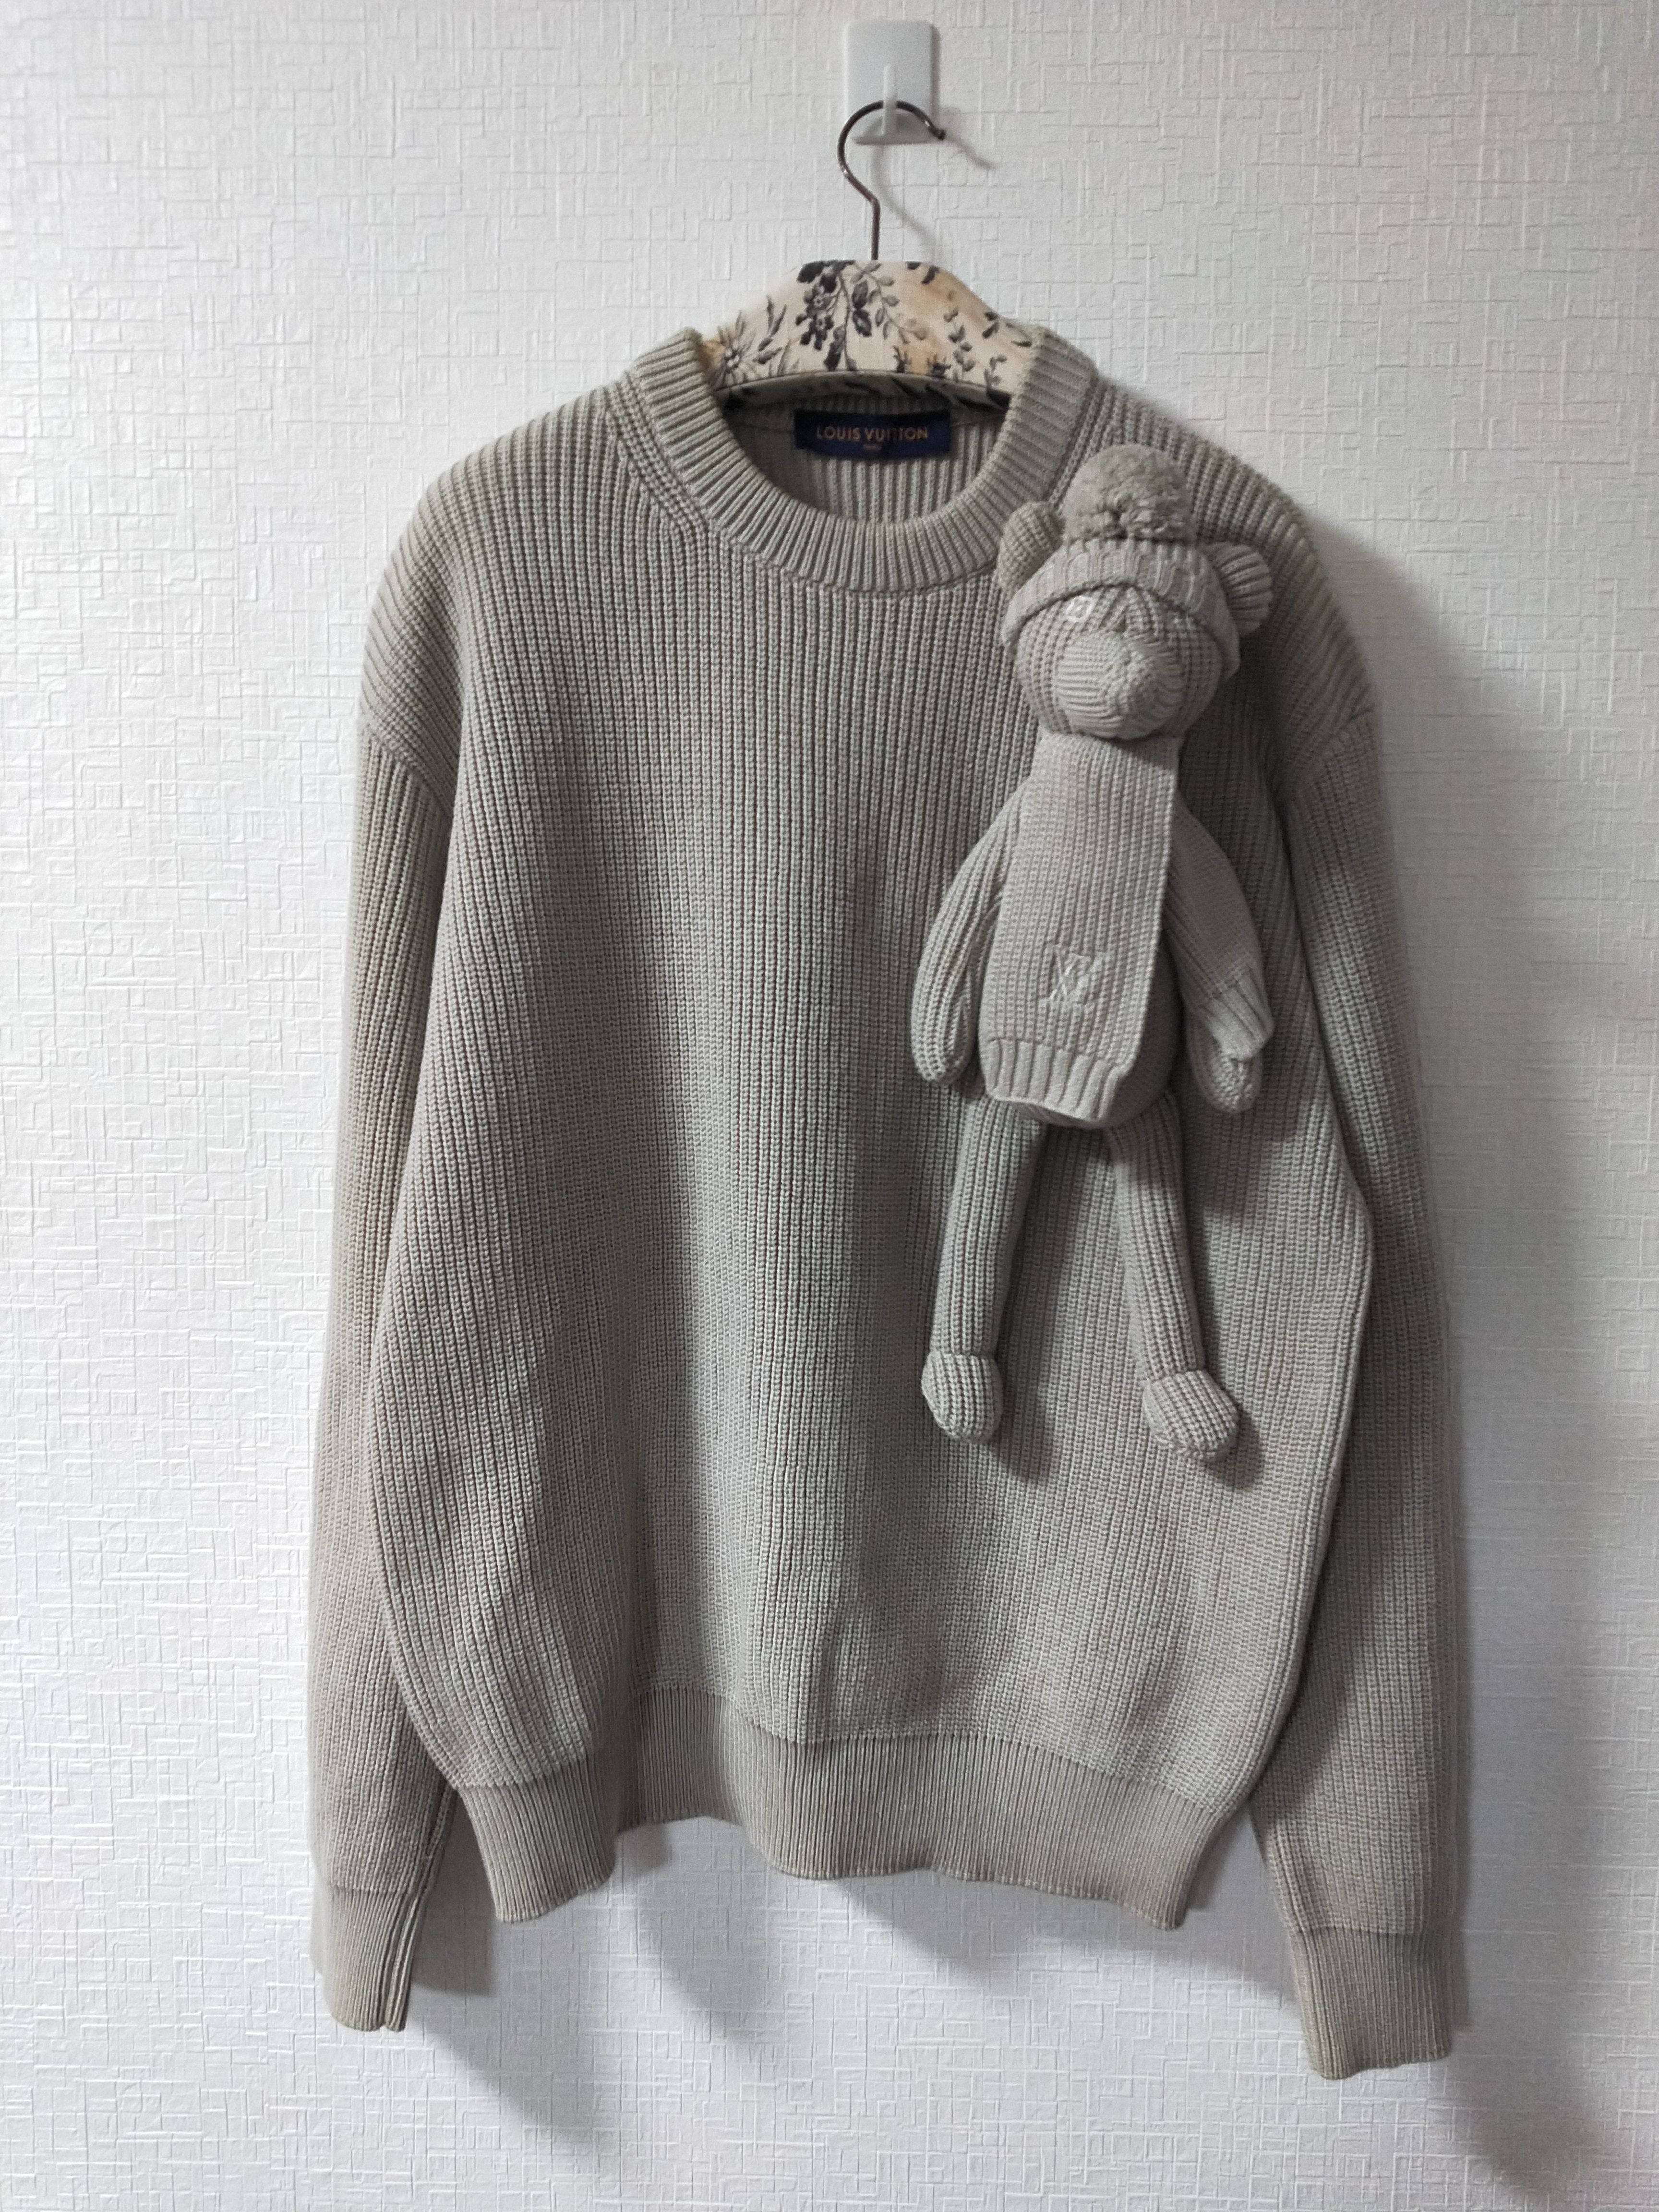 lv teddy bear sweater